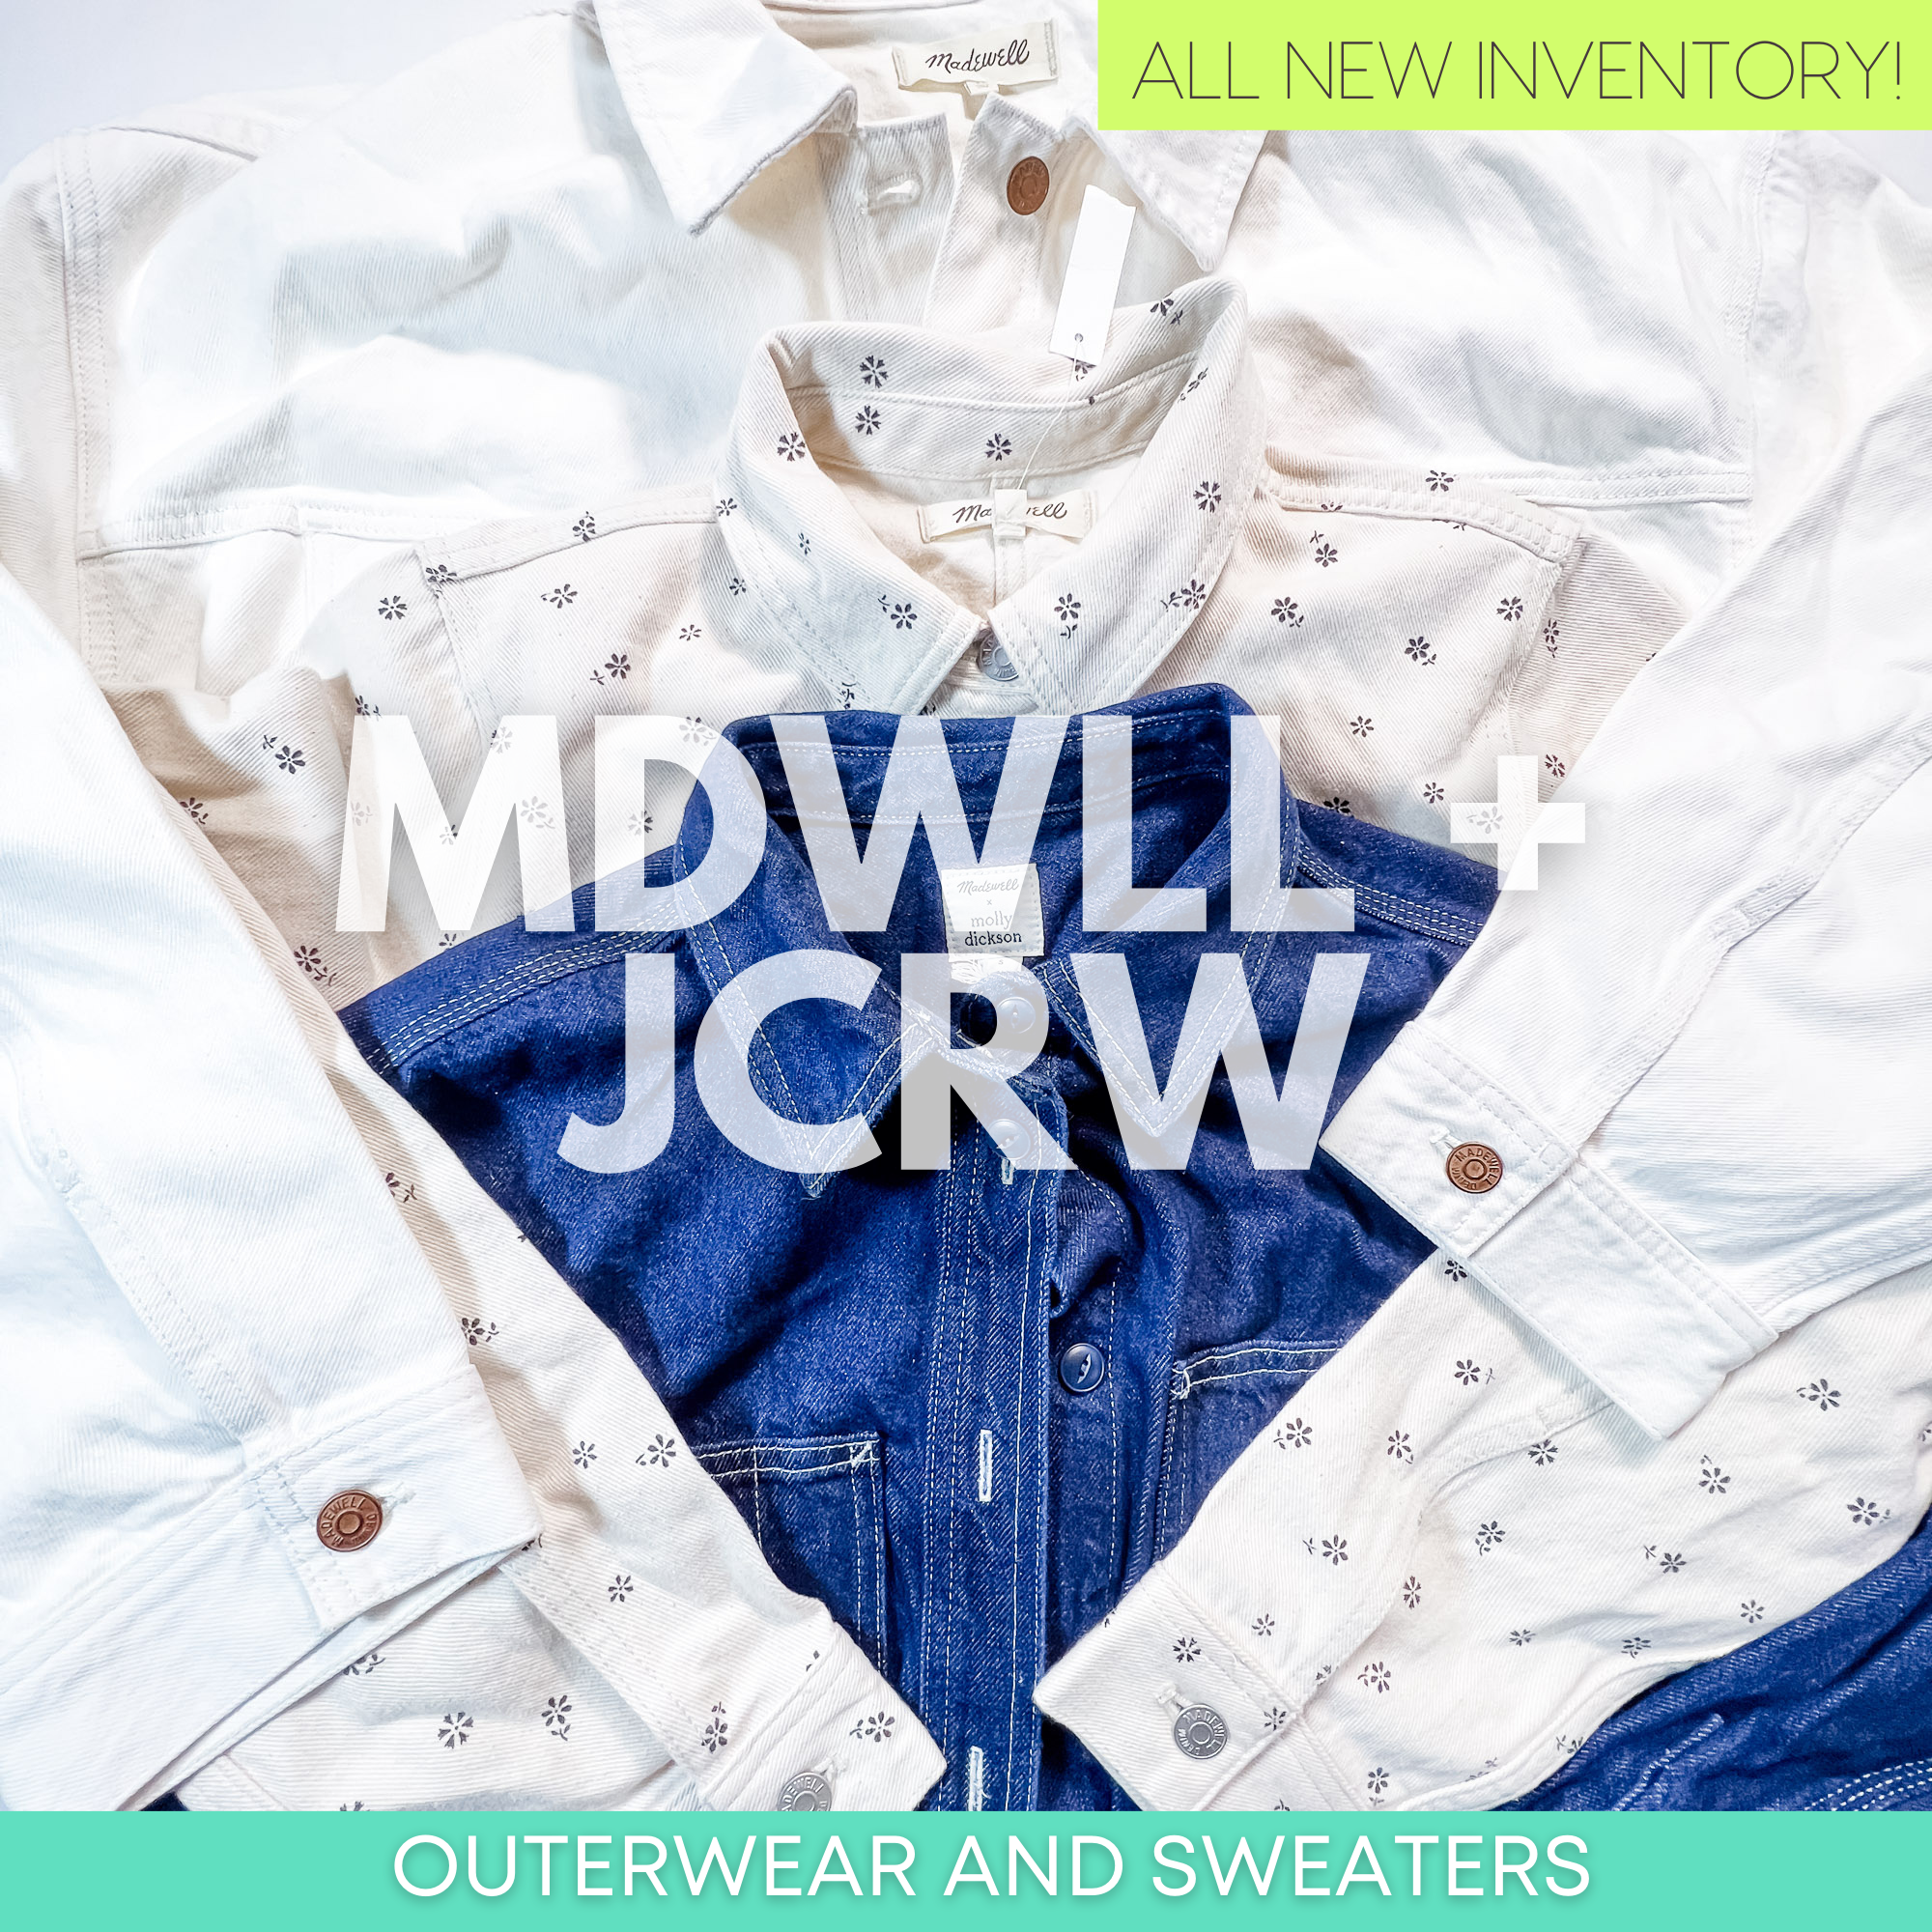 MDWLL + JCRW Outerwear & Sweaters Women's New/Returns Bulk Clothing